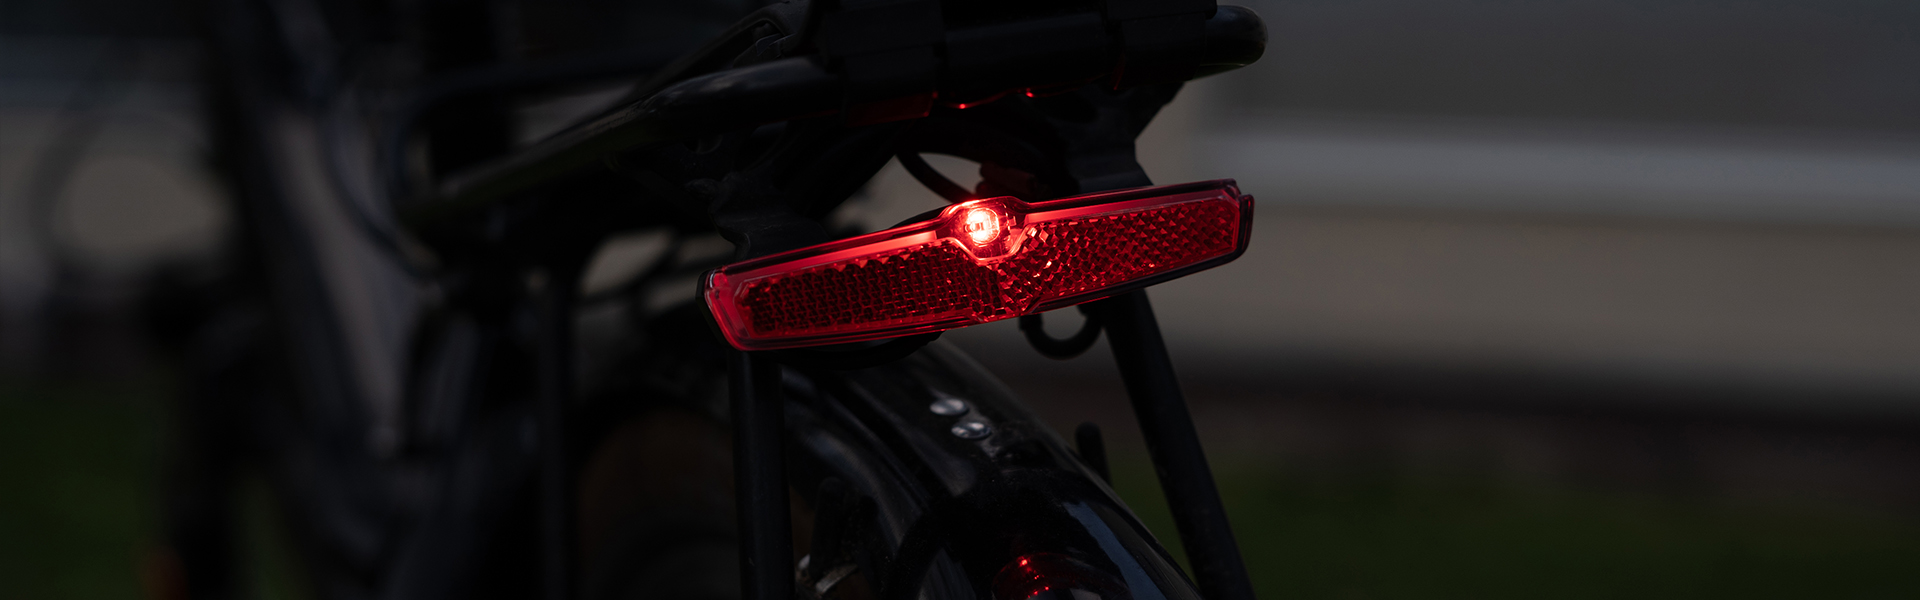 Sate-lite 35 LUX USB rechargeable bike light StVZO eletric bike front light OSRAM LED waterproof